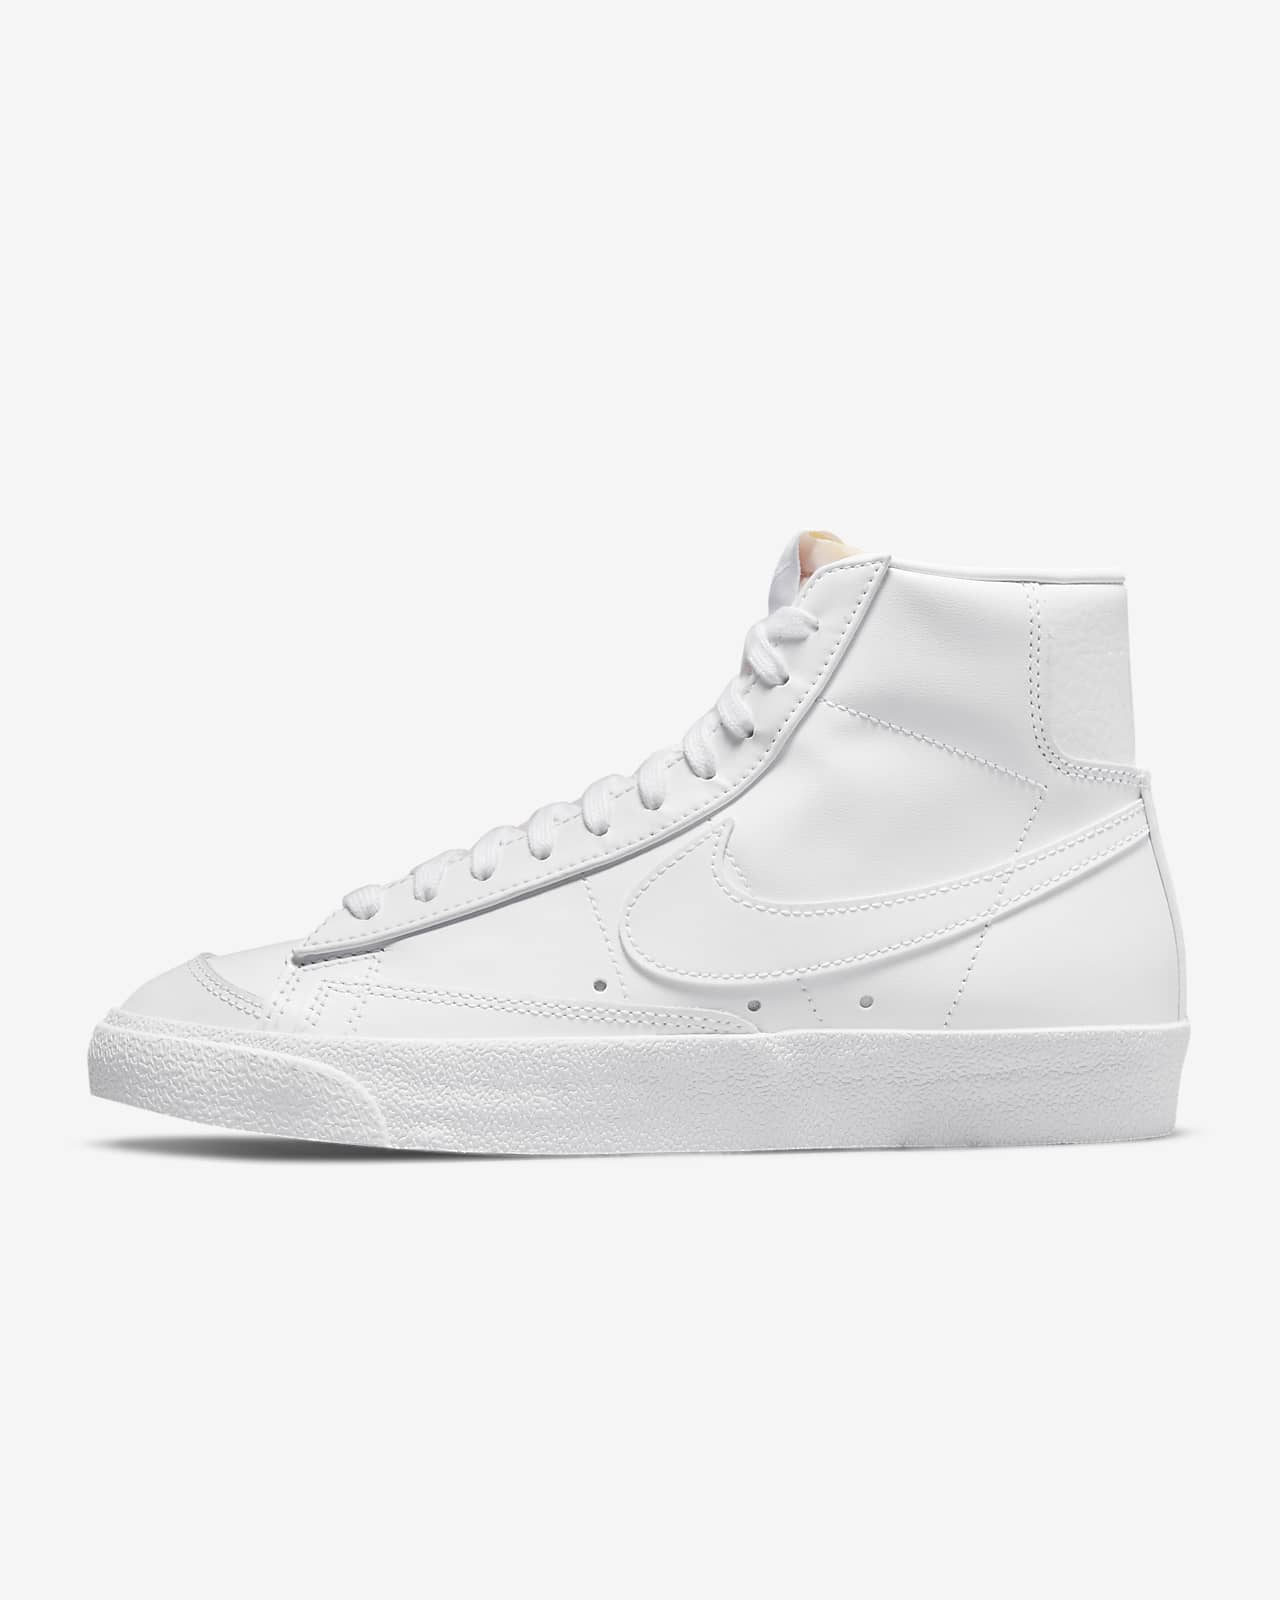 Nike Blazer Low Triple White Shoes(8 US M), Men's Fashion, Footwear,  Sneakers on Carousell